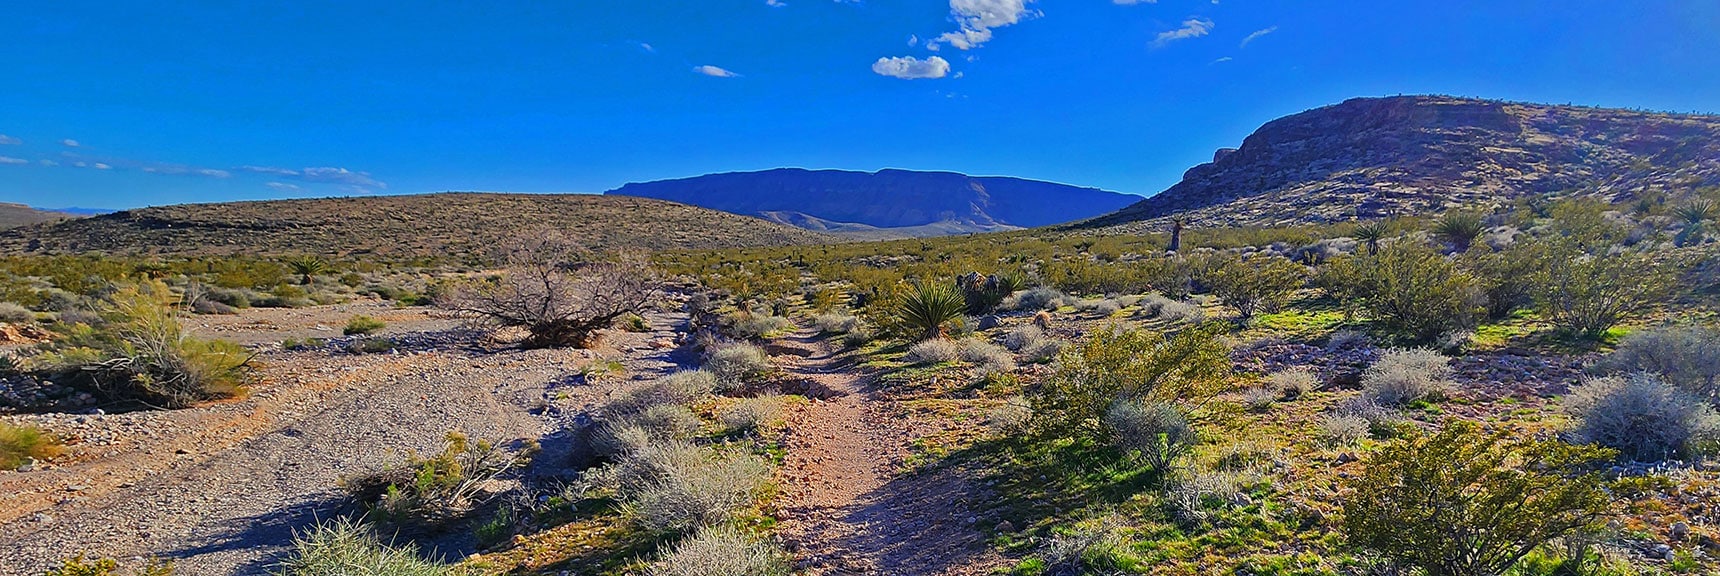 Return to Gene’s Trailhead on Half Wilson Trail Around Base of Peak 3844 Hill. | Gray Cap Ridge / Brownstone Basin Loop | La Madre Mountains Wilderness, Nevada